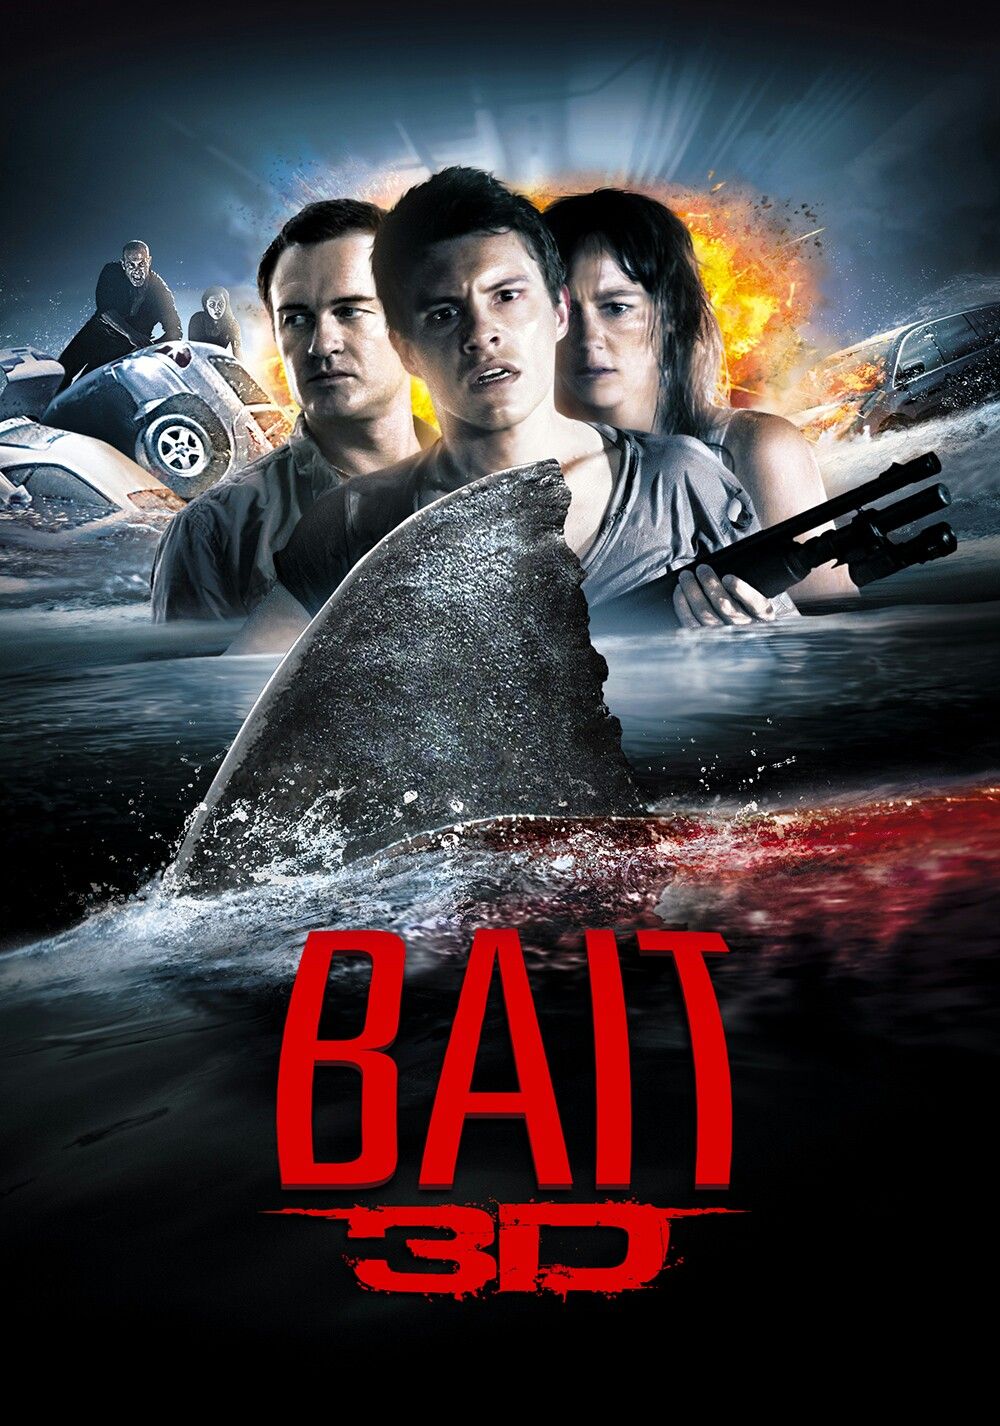 Bait 3D 2012 Hindi Dubbed Full Movie 250MB HDRip 480p